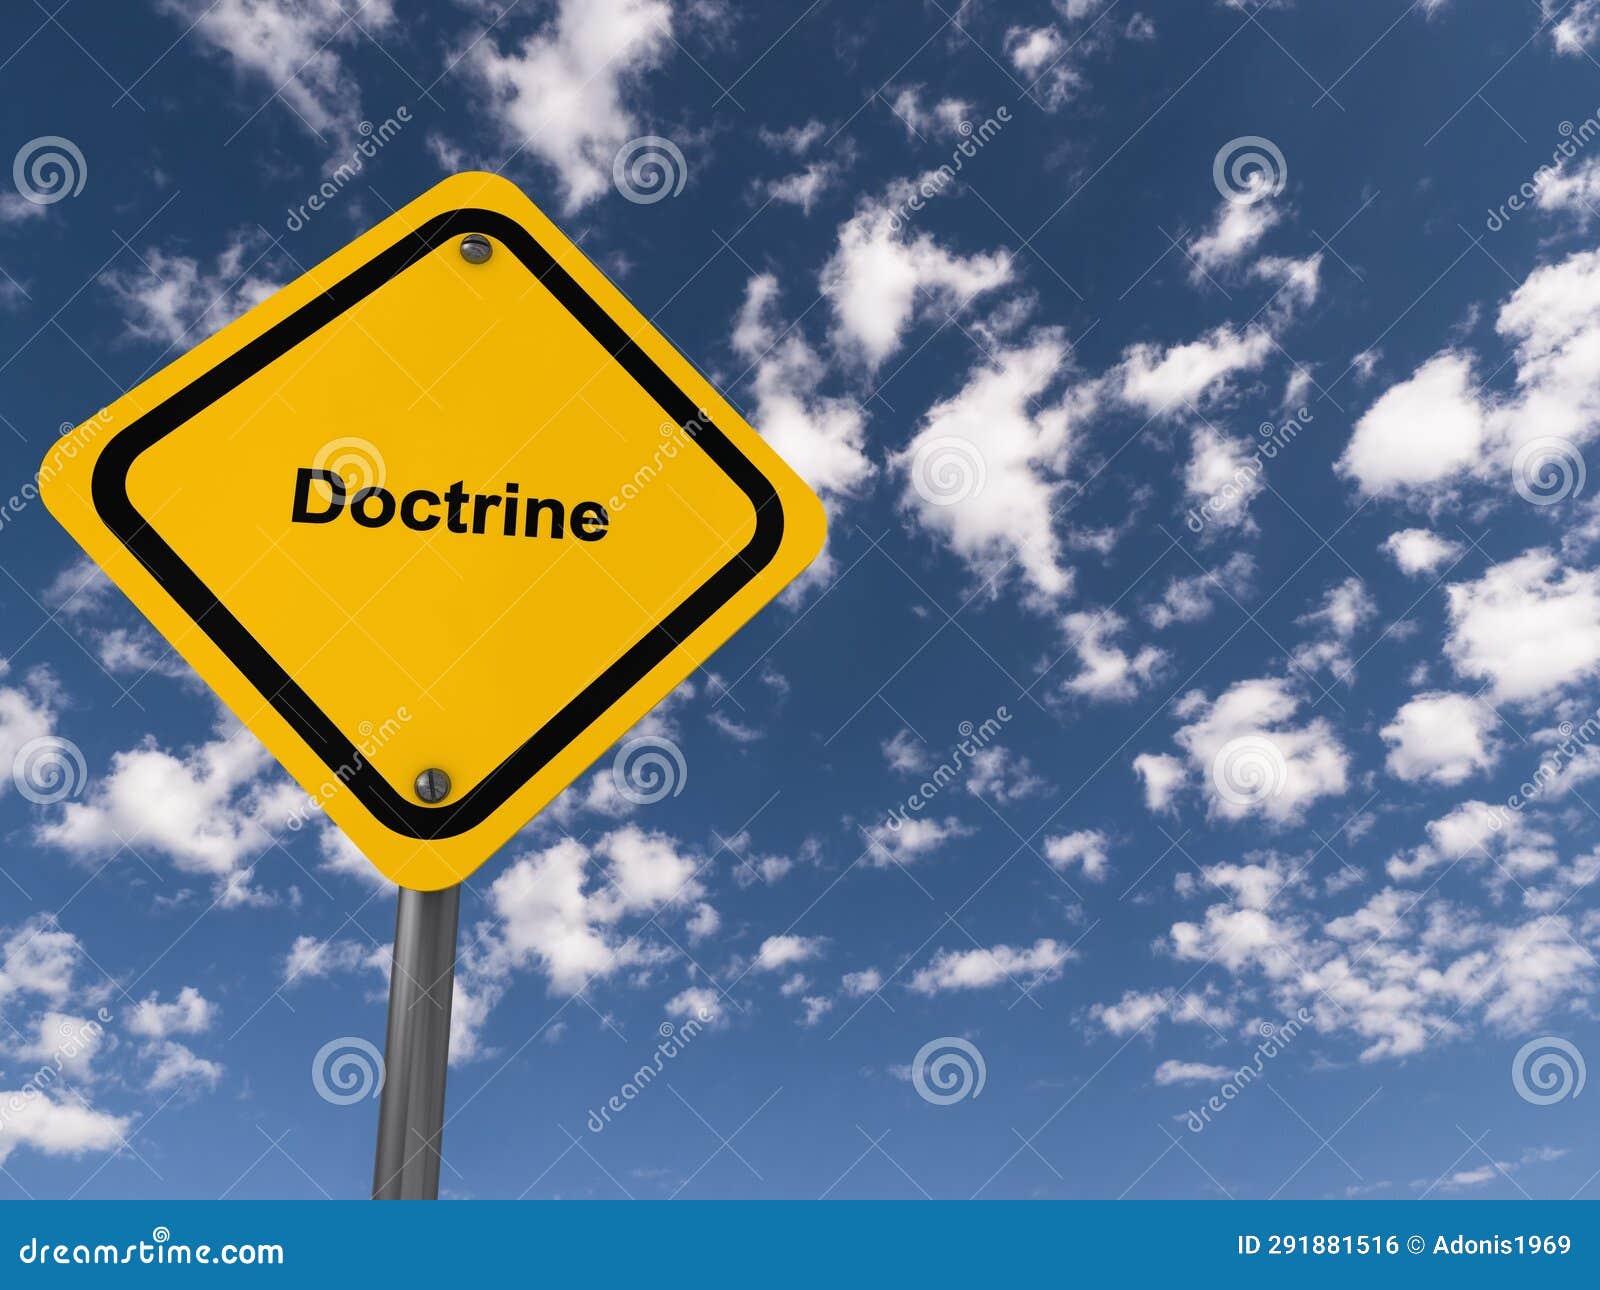 doctrine traffic sign on blue sky